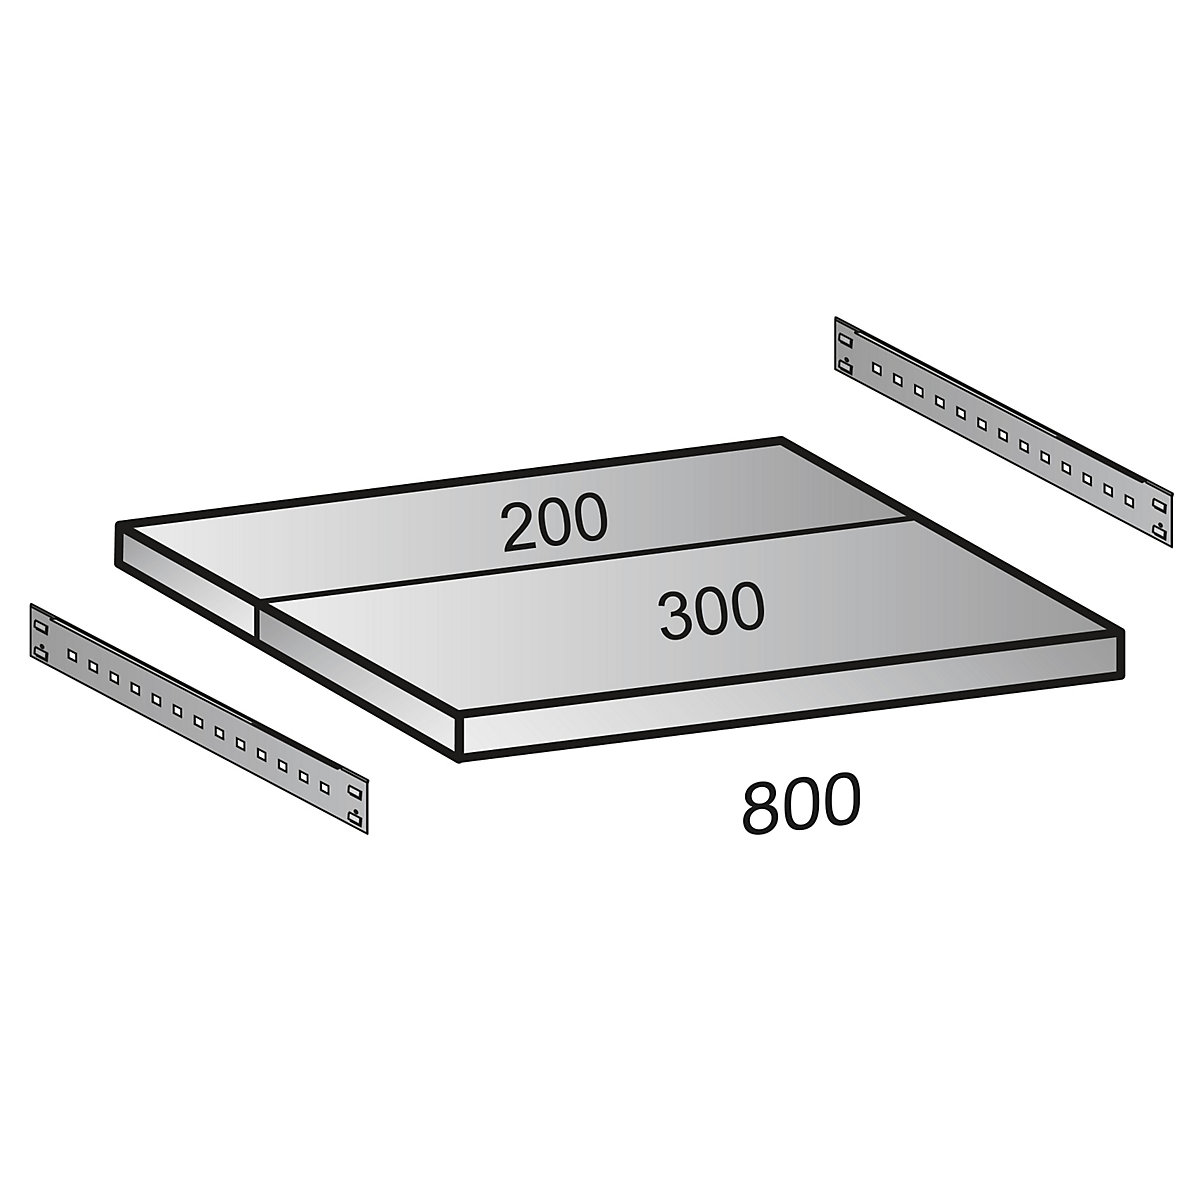 Shelf for CLEANA boltless shelf unit, shelf width 800 mm, depth 500 mm